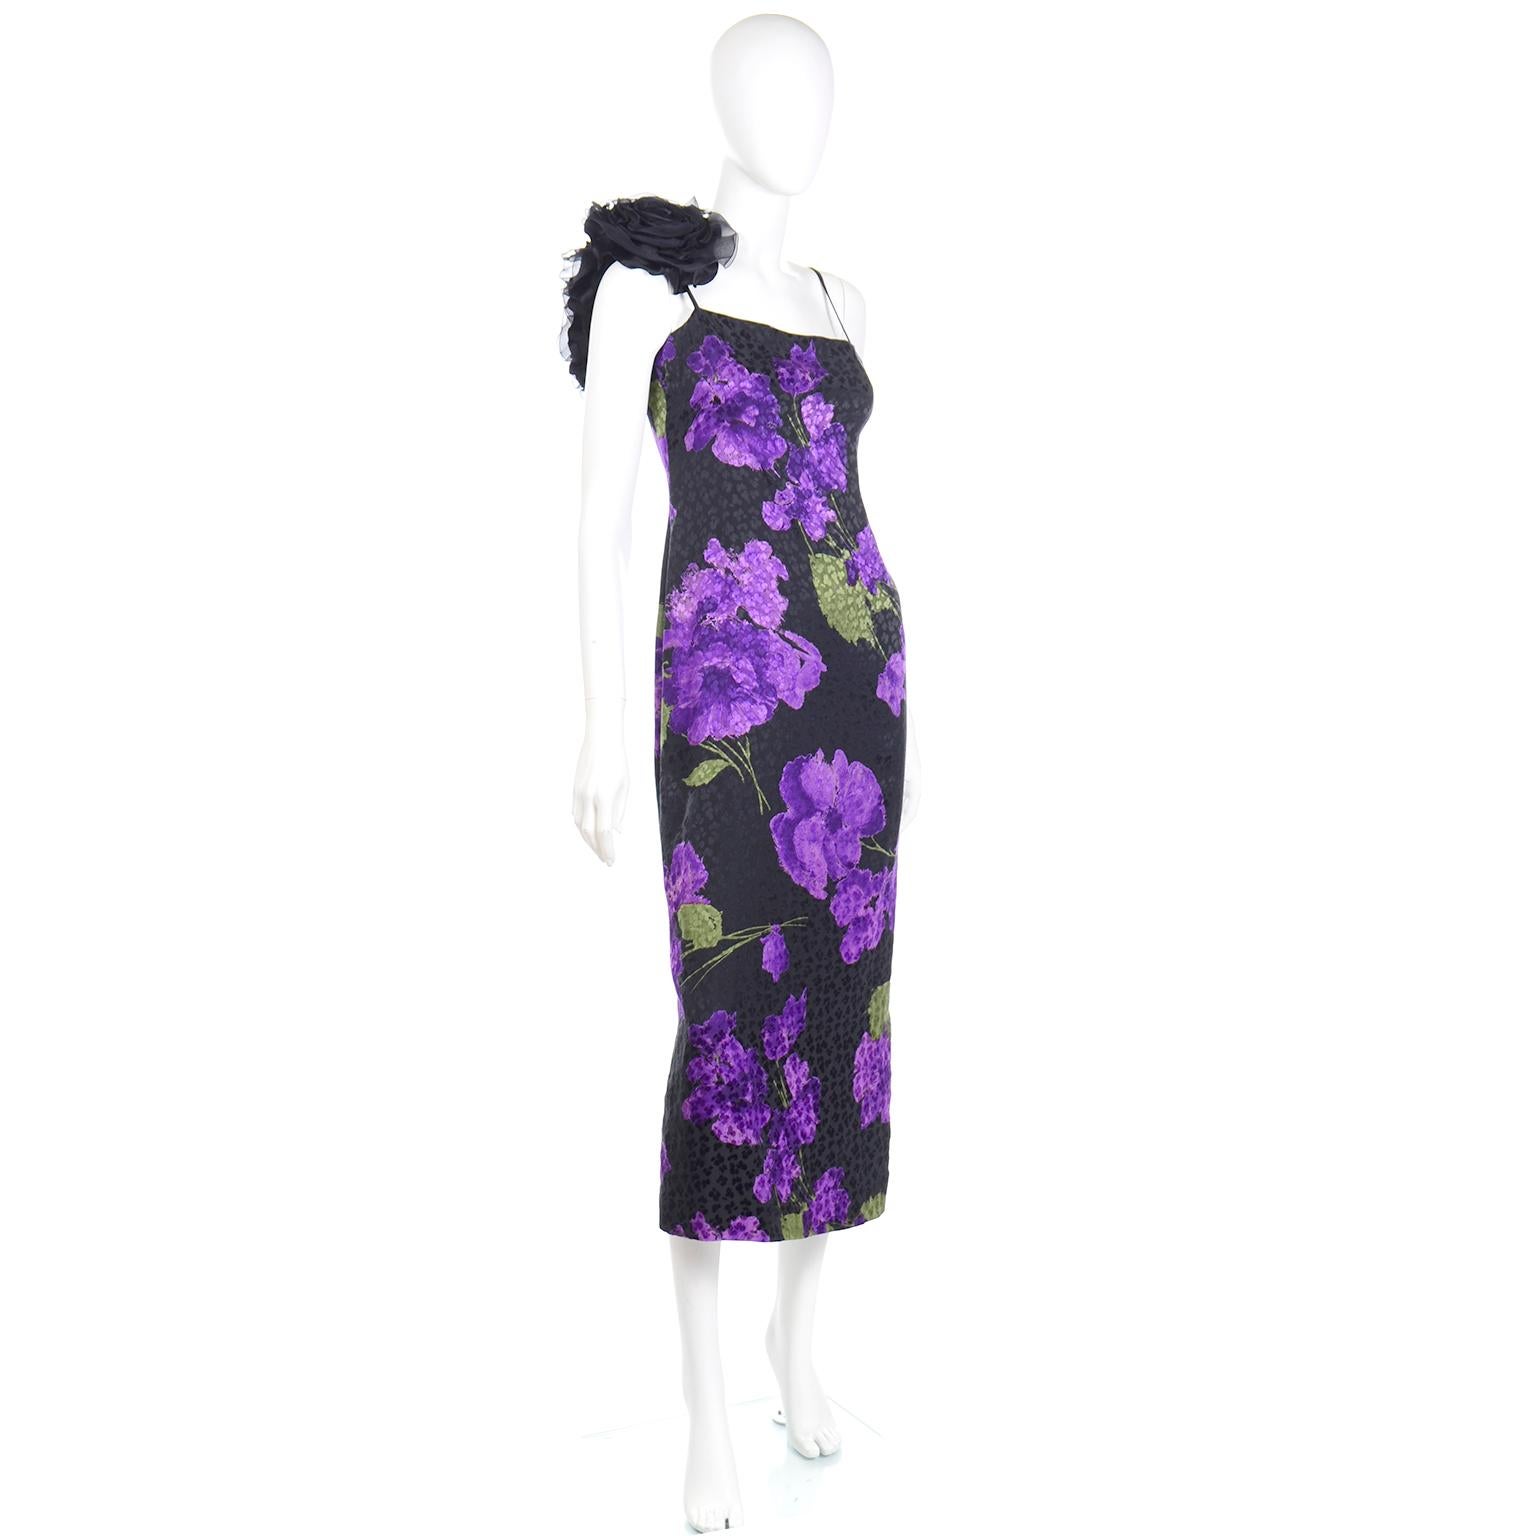 black dress with purple flowers